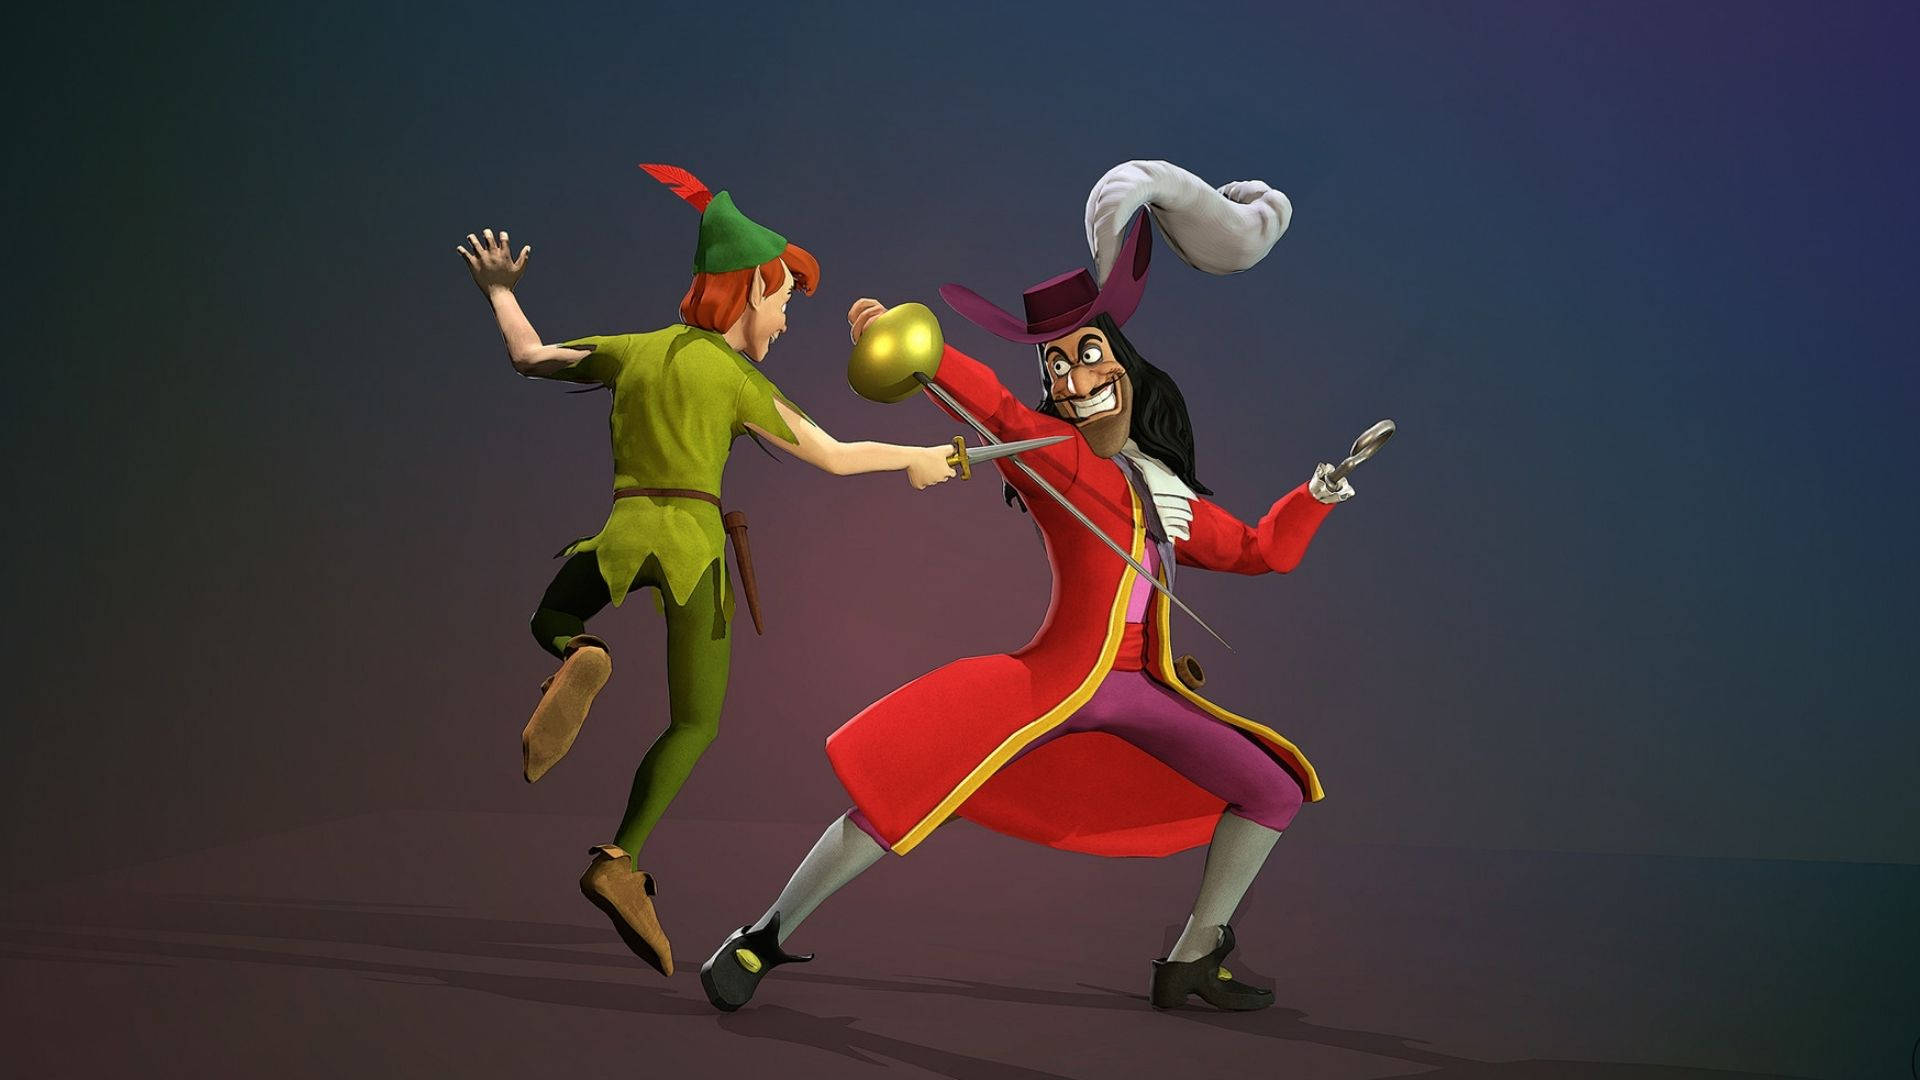 Download Captain Hook Fighting With Peter Pan Wallpaper